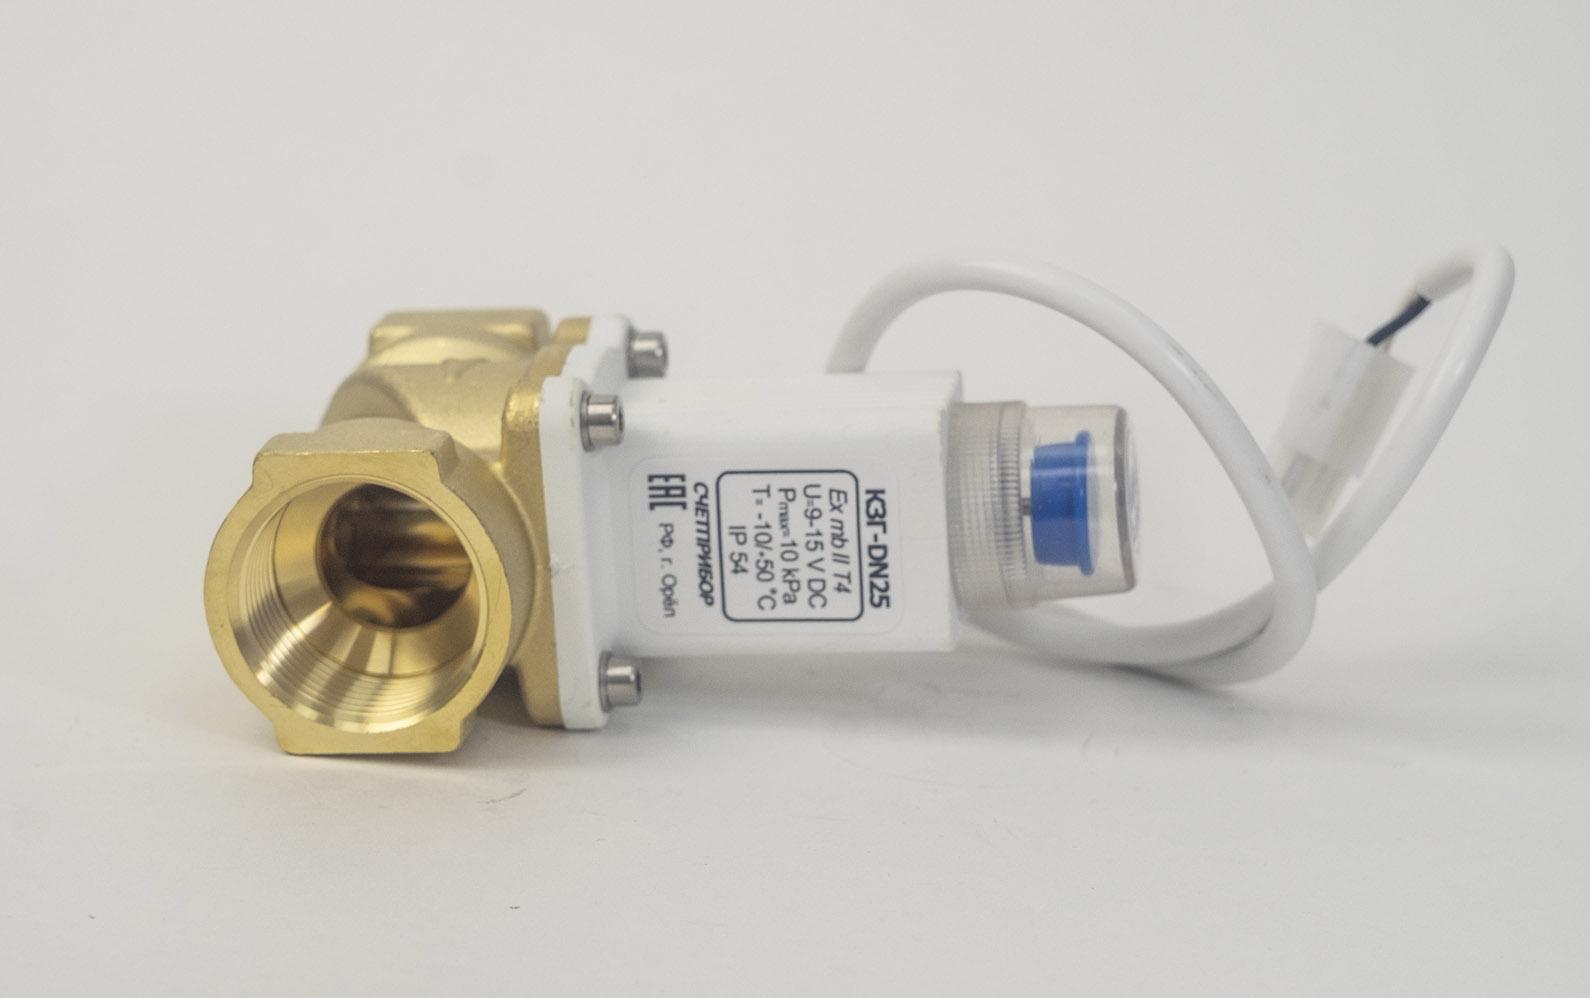 Gas check valve KZG 